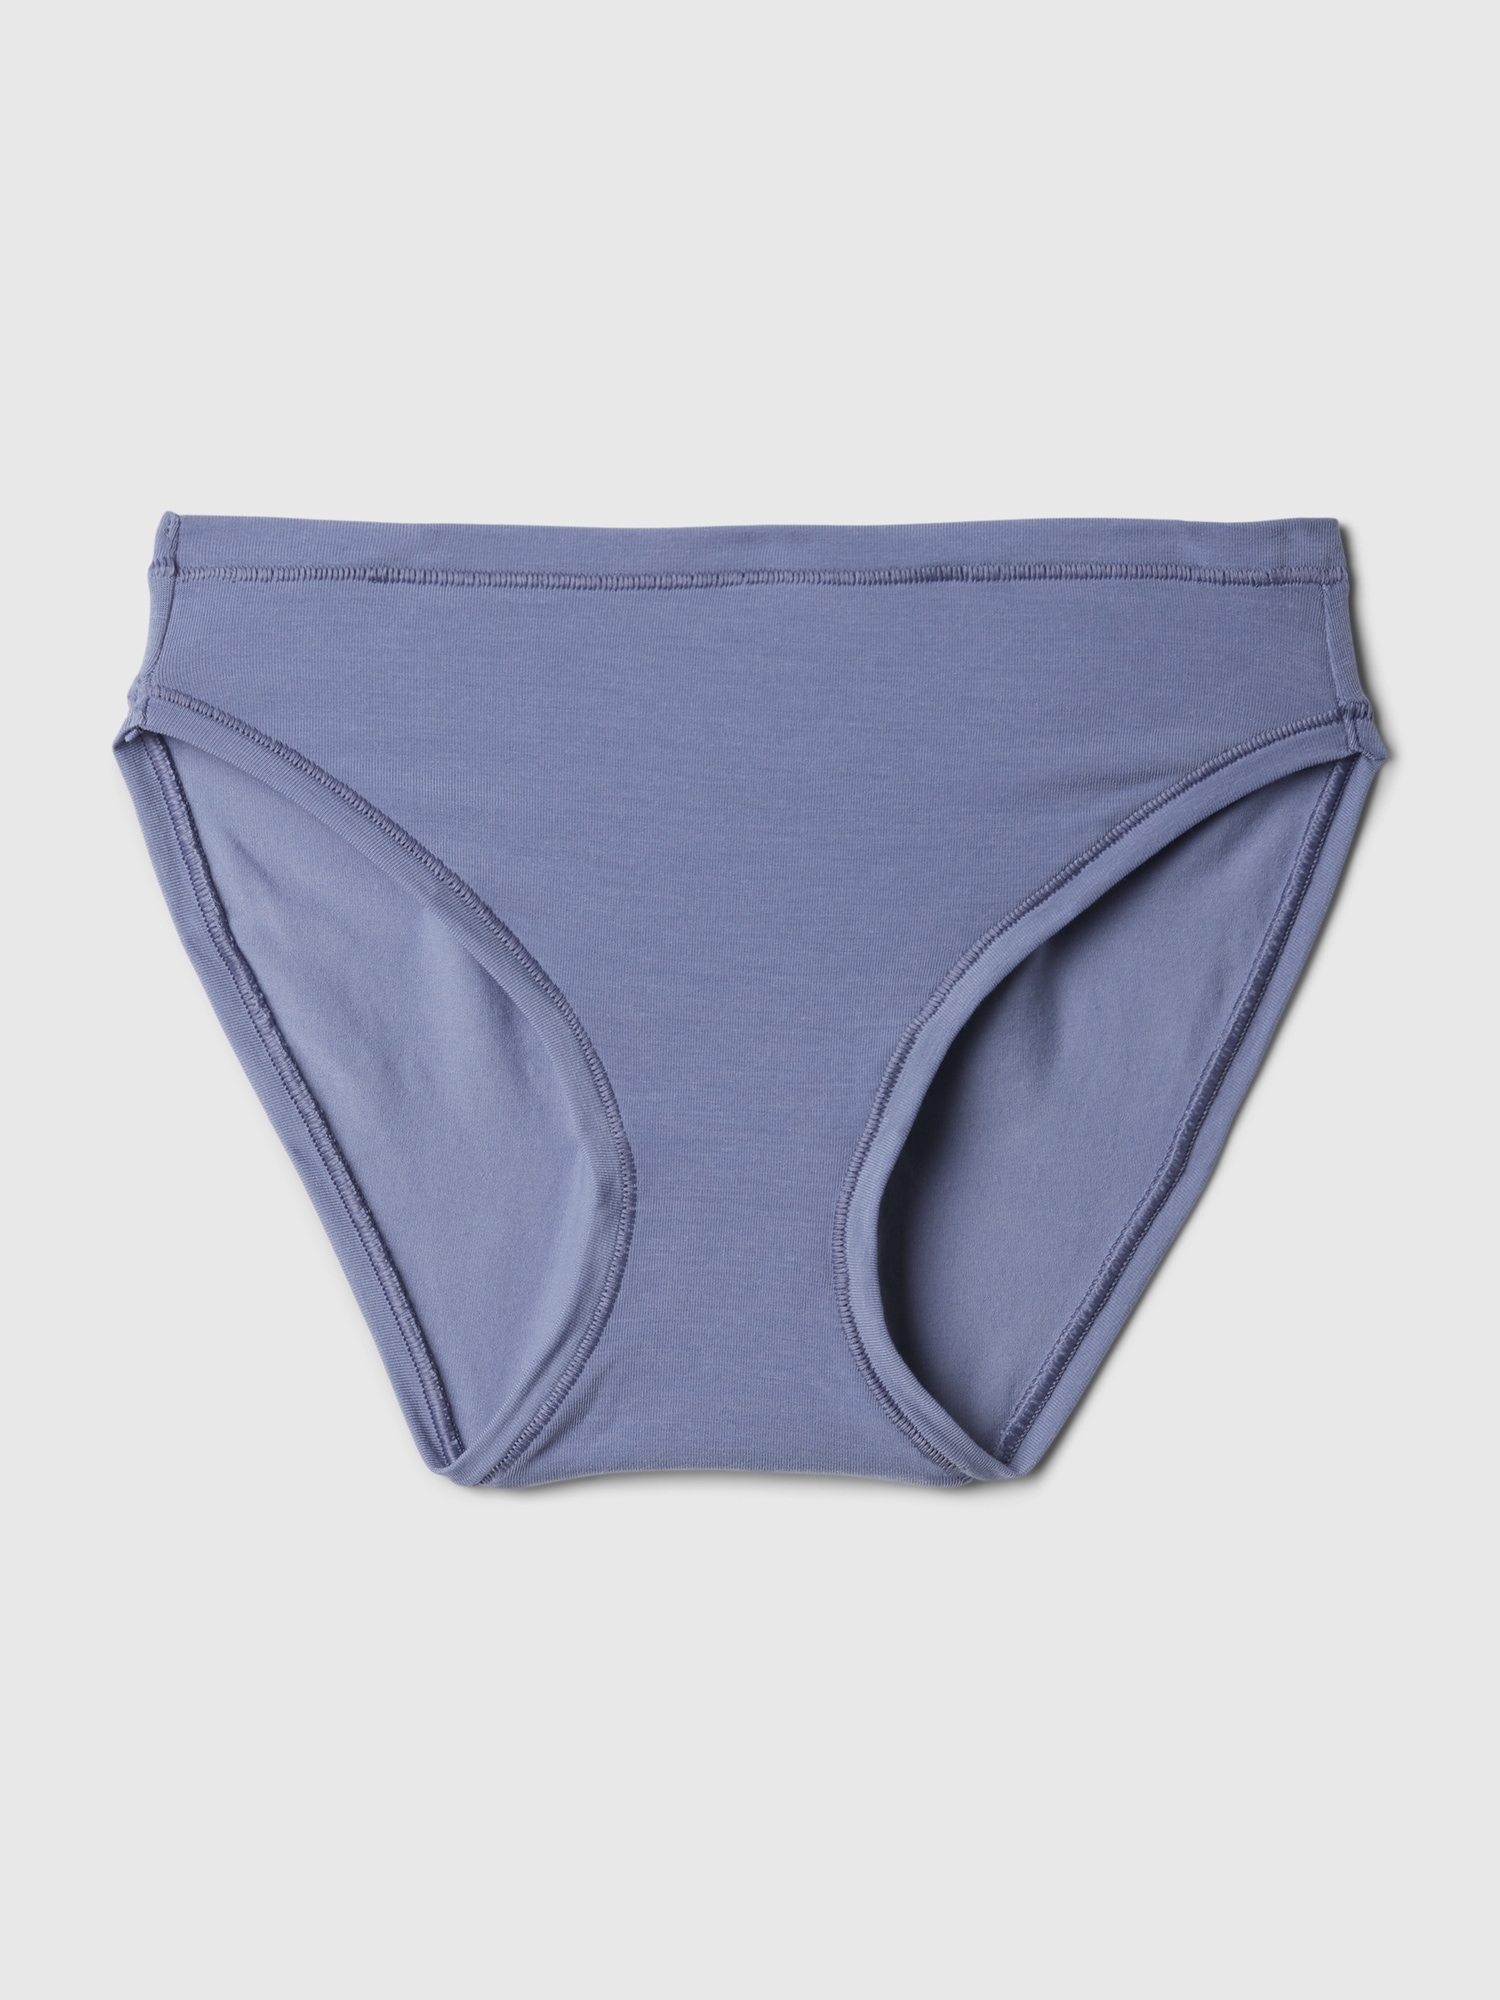 Women's underwear Cotton Knicker Bikini Brief Panties Underwear 6-Pack Small  210